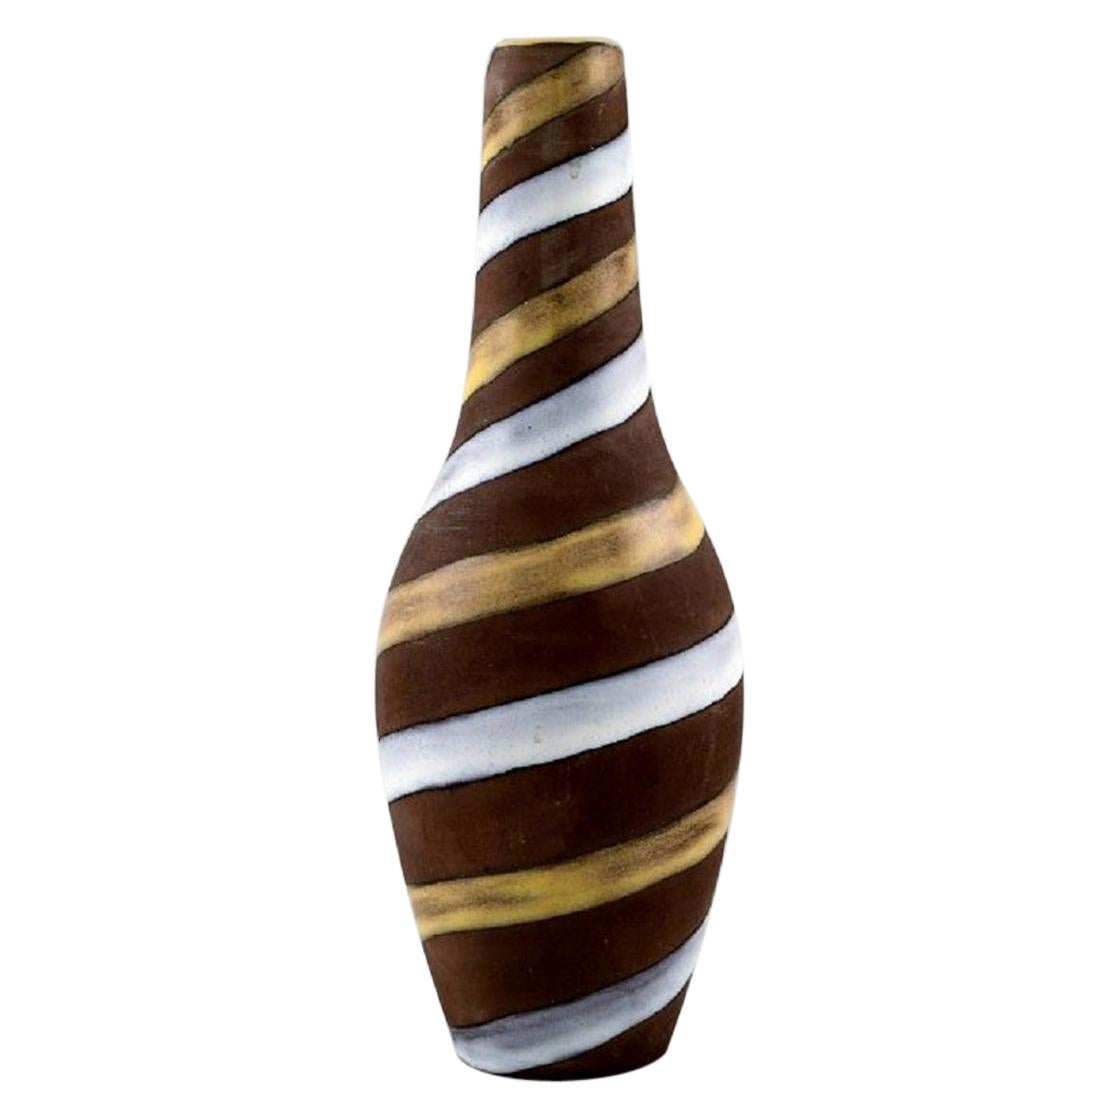 Vase en céramique émaillée Ingrid Atterberg pour Upsala-Ekeby, motif en spirale